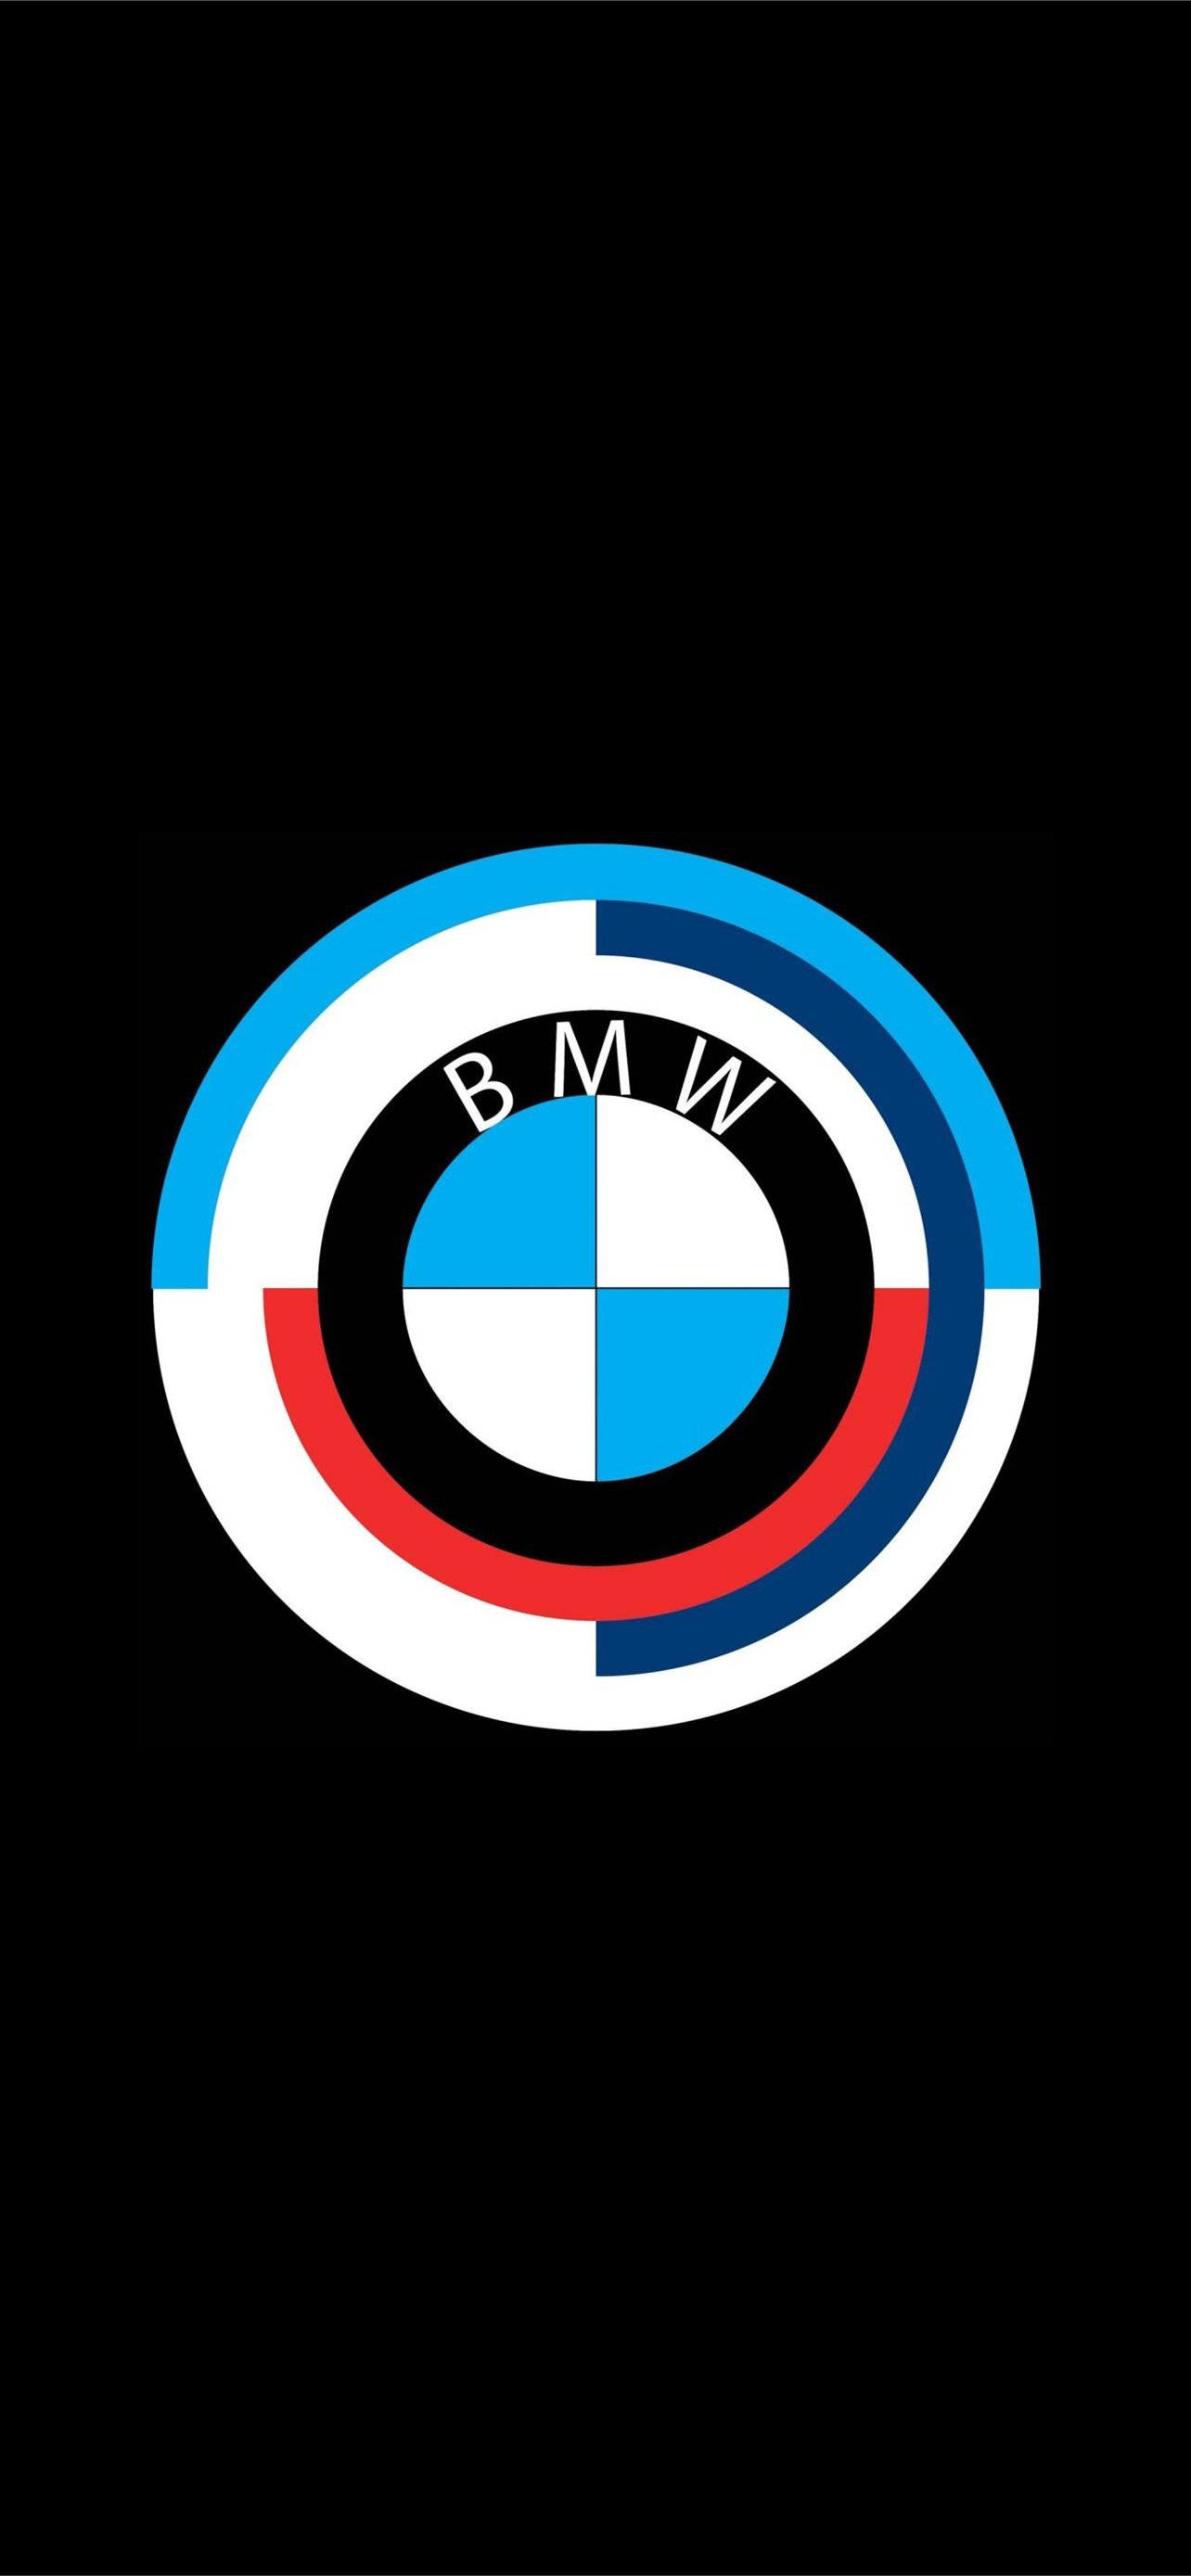 BMW Logo Wallpapers  Wallpaper Cave